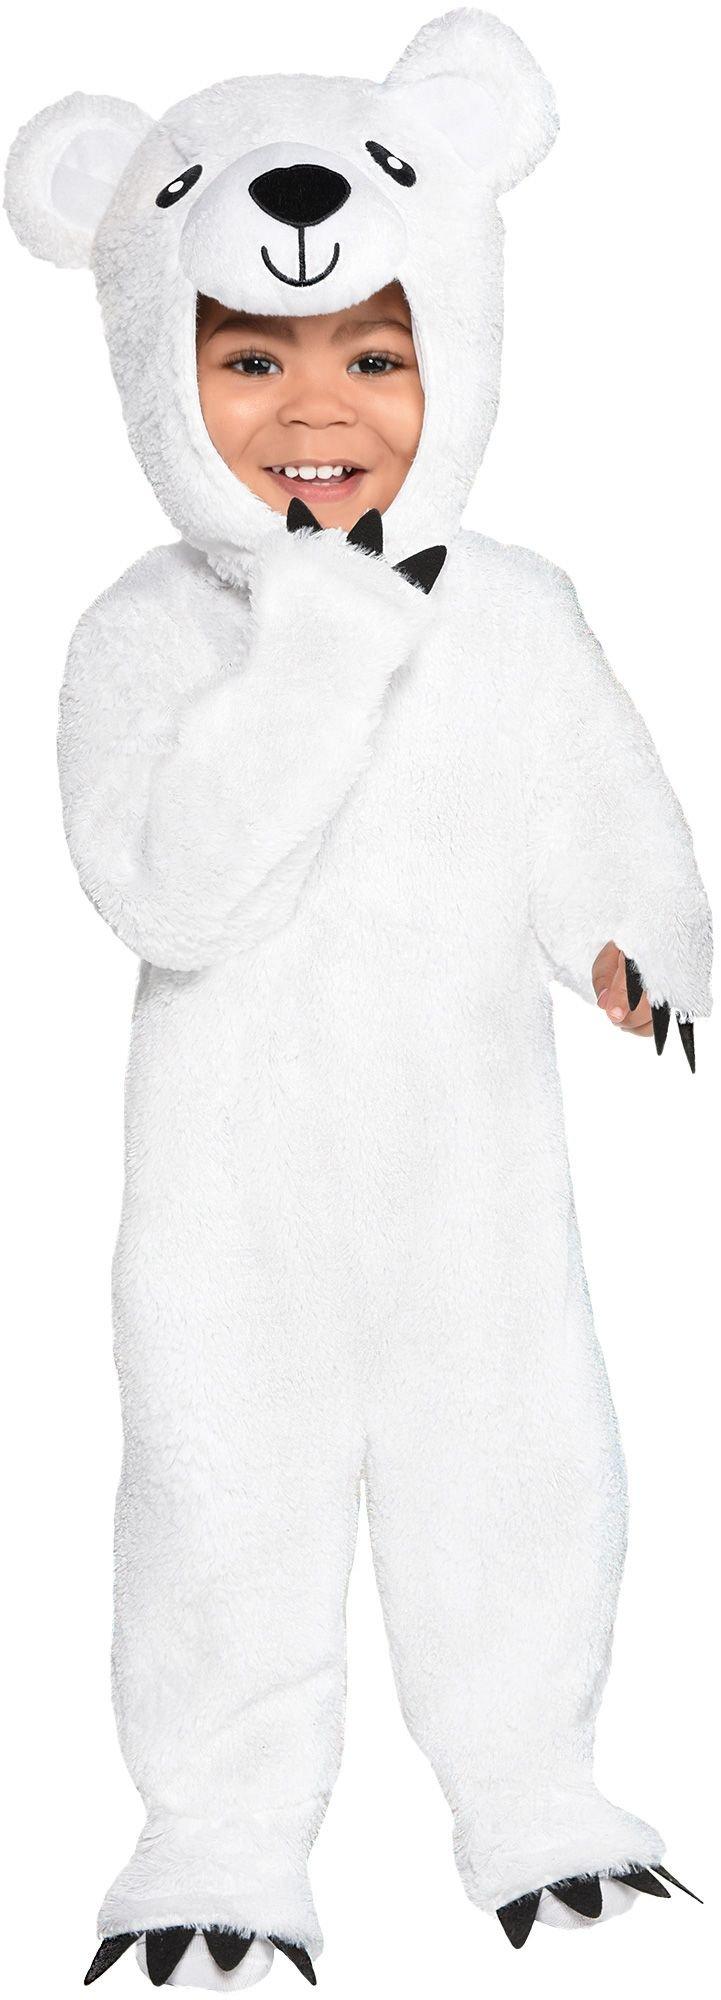 Baby Soft Cuddly Polar Bear Costume | Party City